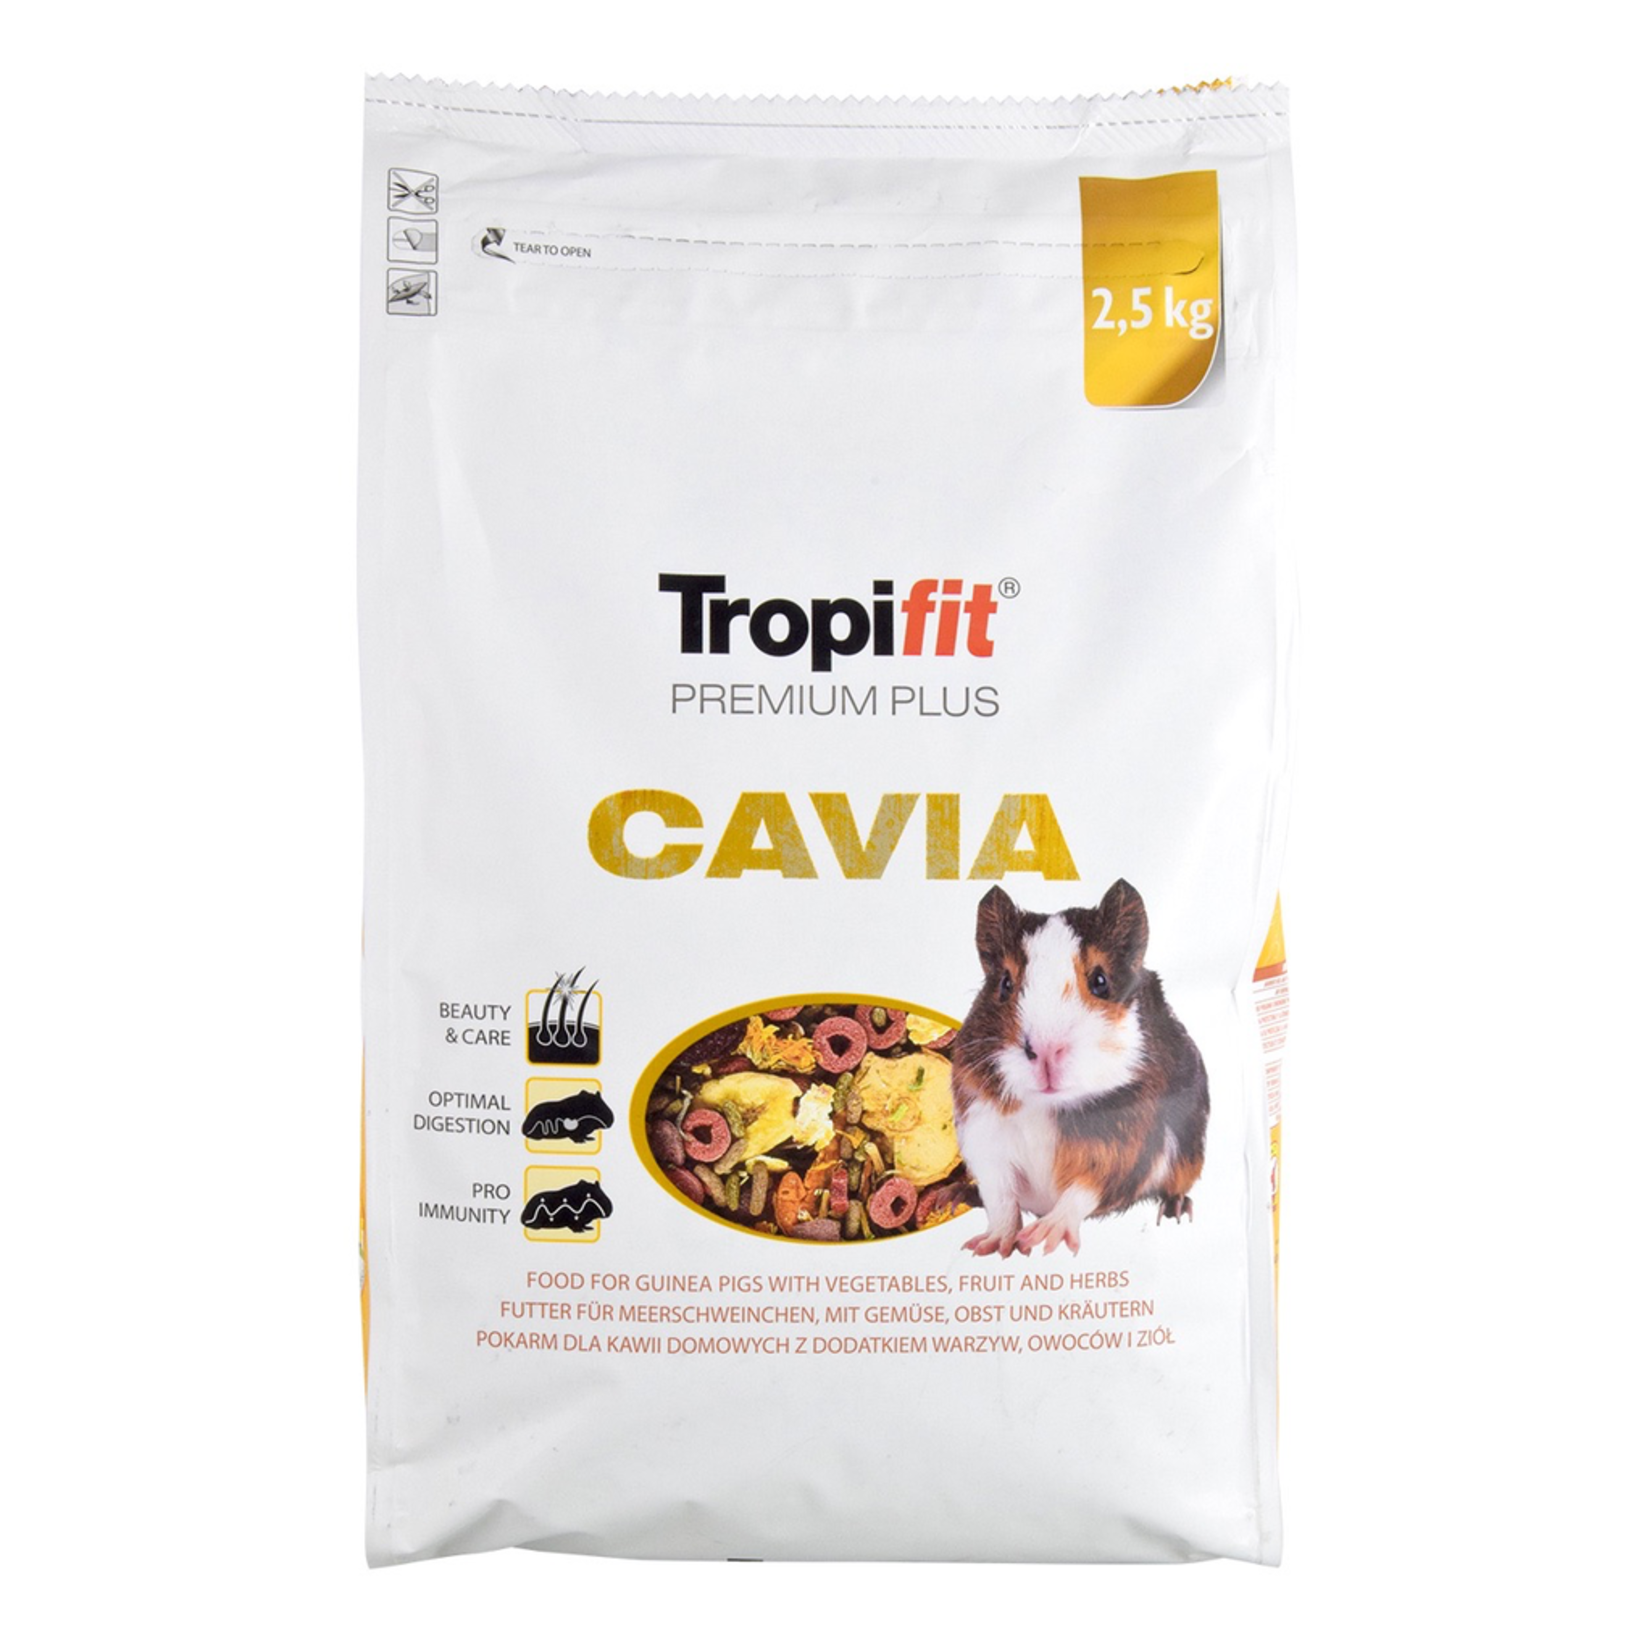 TROPIFIT (W) Tropifit Premium Plus Cavia - 2.5 kg